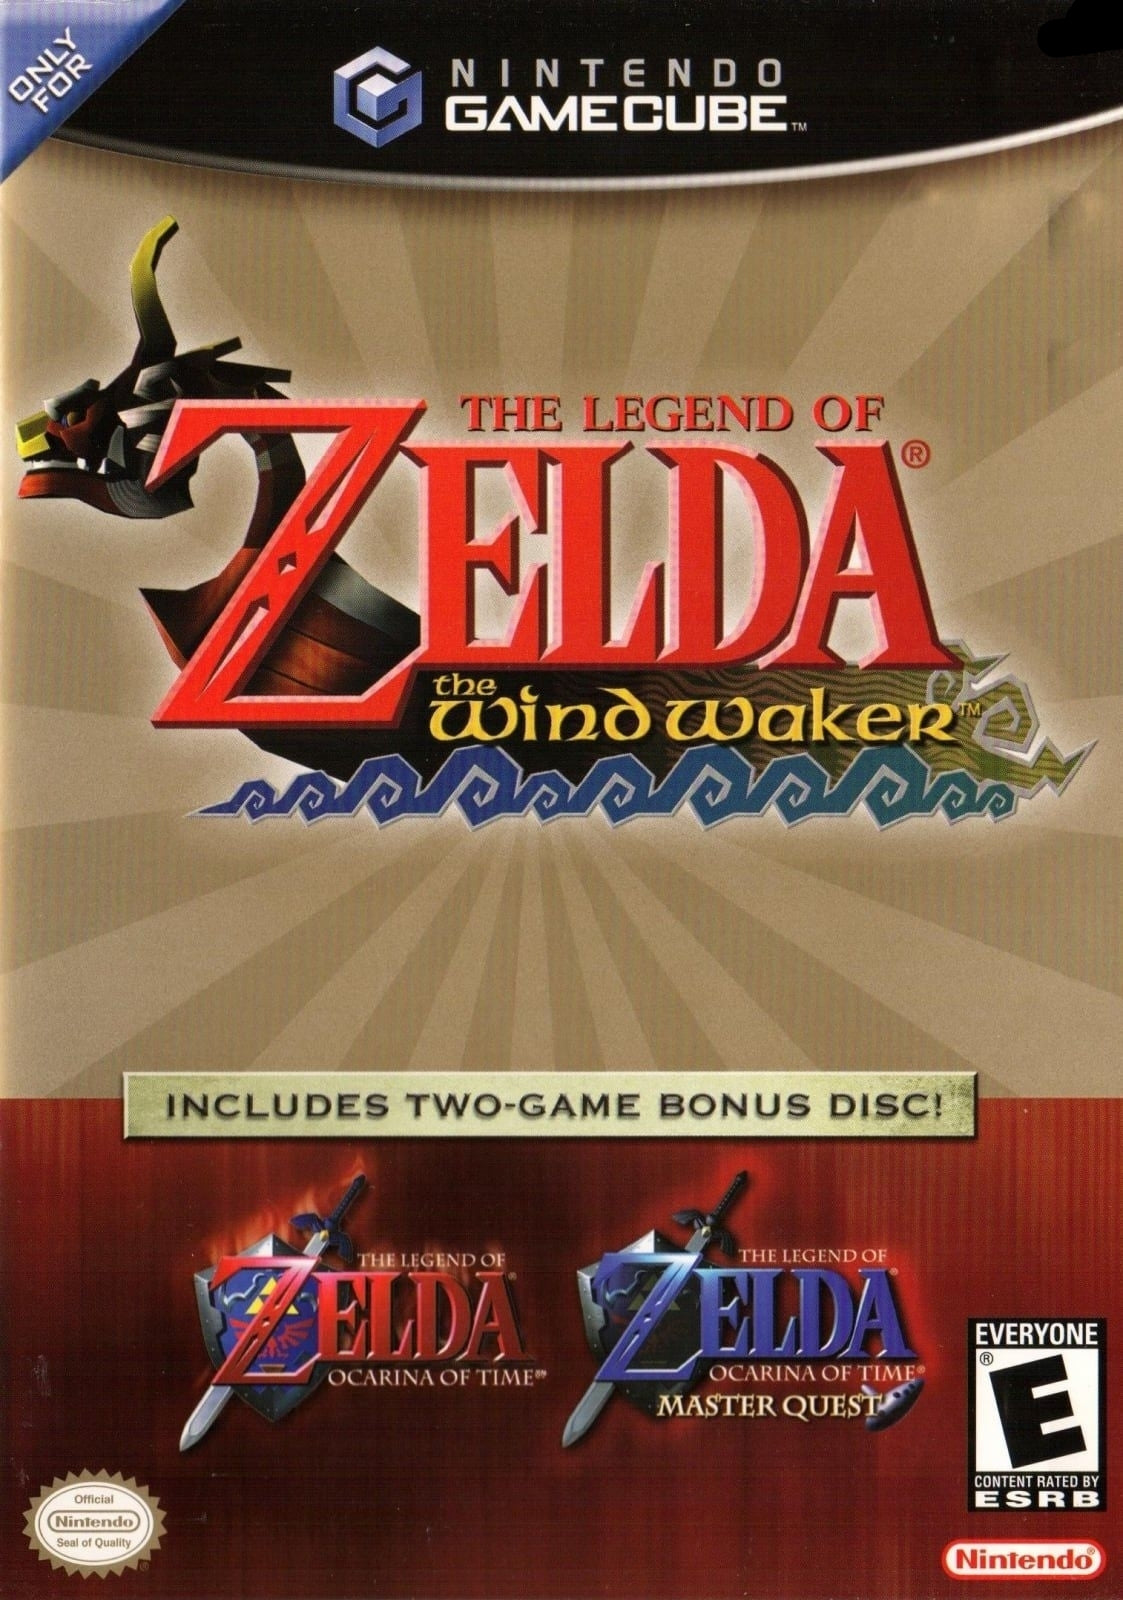 The Legend of Zelda: The Wind Waker / The Legend of Zelda: Ocarina of Time / Master Quest (GameCube)